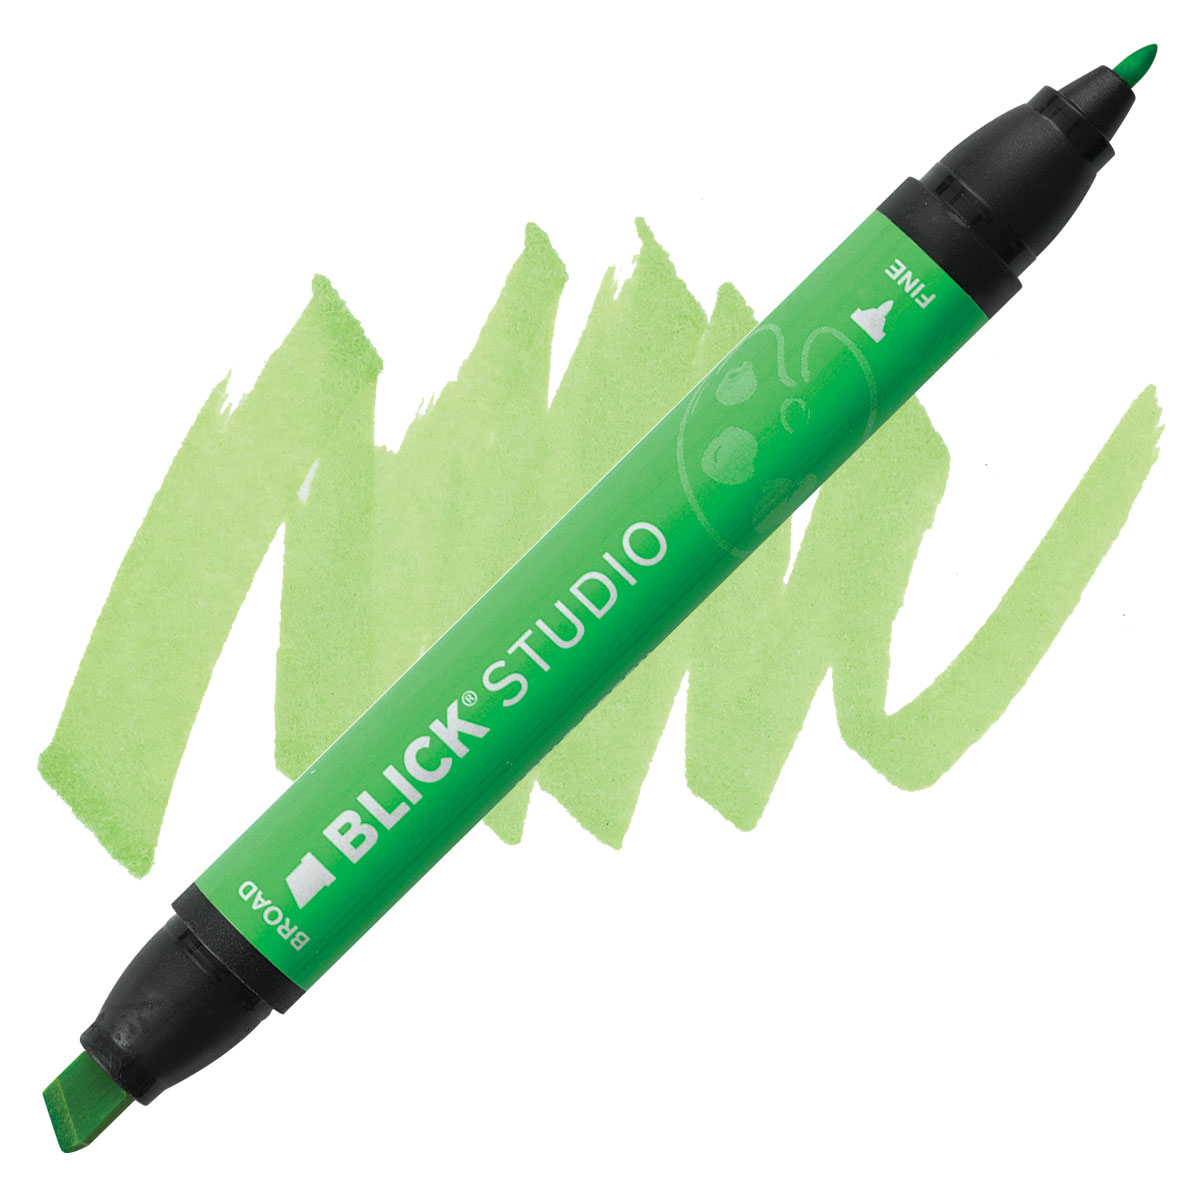 blick studio marker review｜TikTok Search